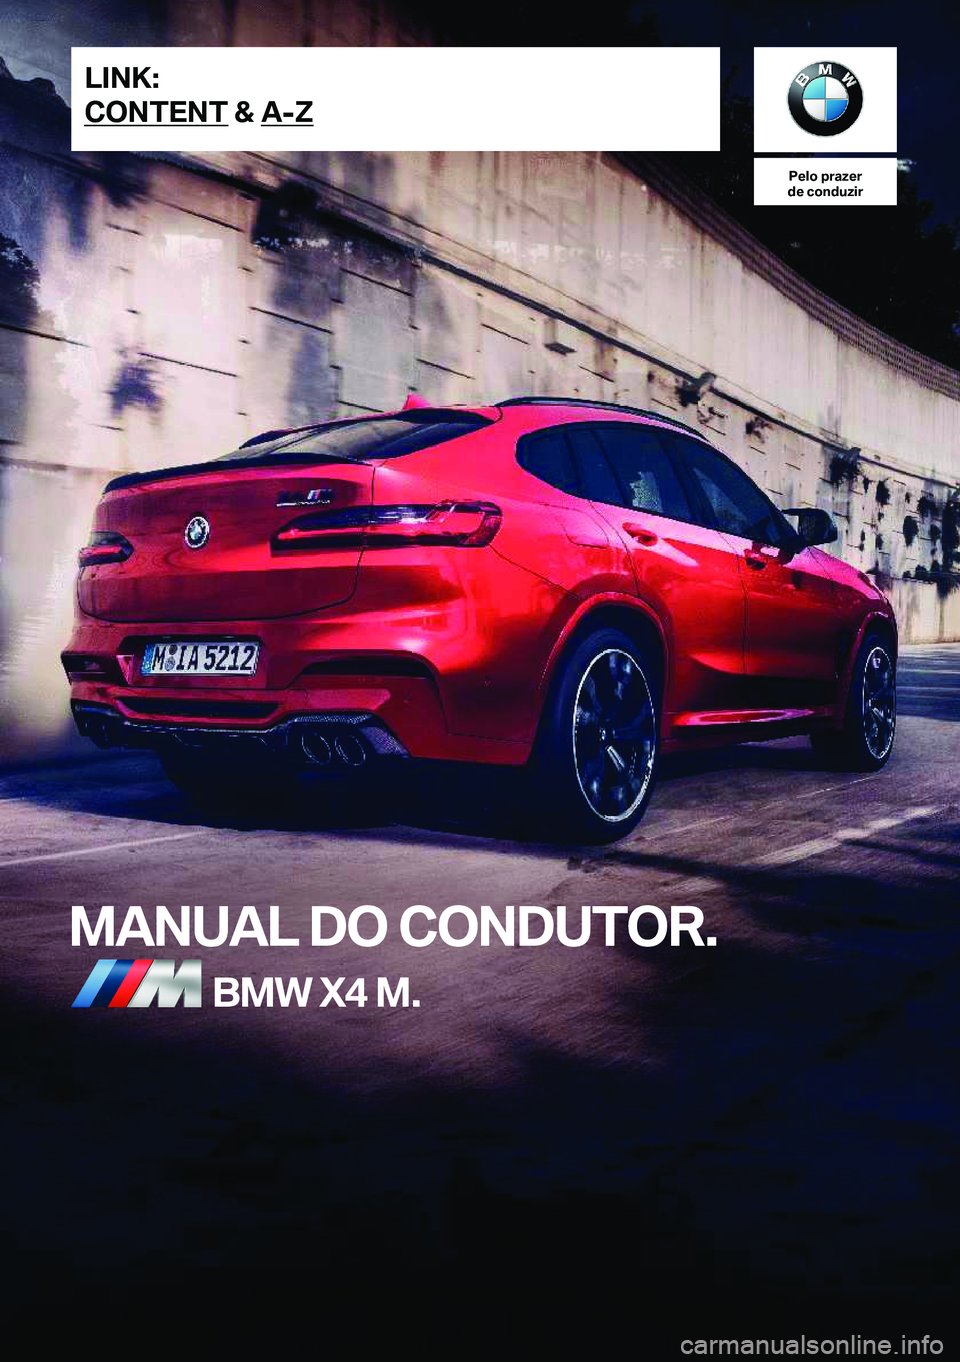 BMW X4 M 2020  Manual do condutor (in Portuguese) �P�e�l�o��p�r�a�z�e�r
�d�e��c�o�n�d�u�z�i�r
�M�A�N�U�A�L��D�O��C�O�N�D�U�T�O�R�.�B�M�W��X�4��M�.�L�I�N�K�:
�C�O�N�T�E�N�T��&��A�-�Z�O�n�l�i�n�e��E�d�i�t�i�o�n��f�o�r��P�a�r�t��n�o�.��0�1�